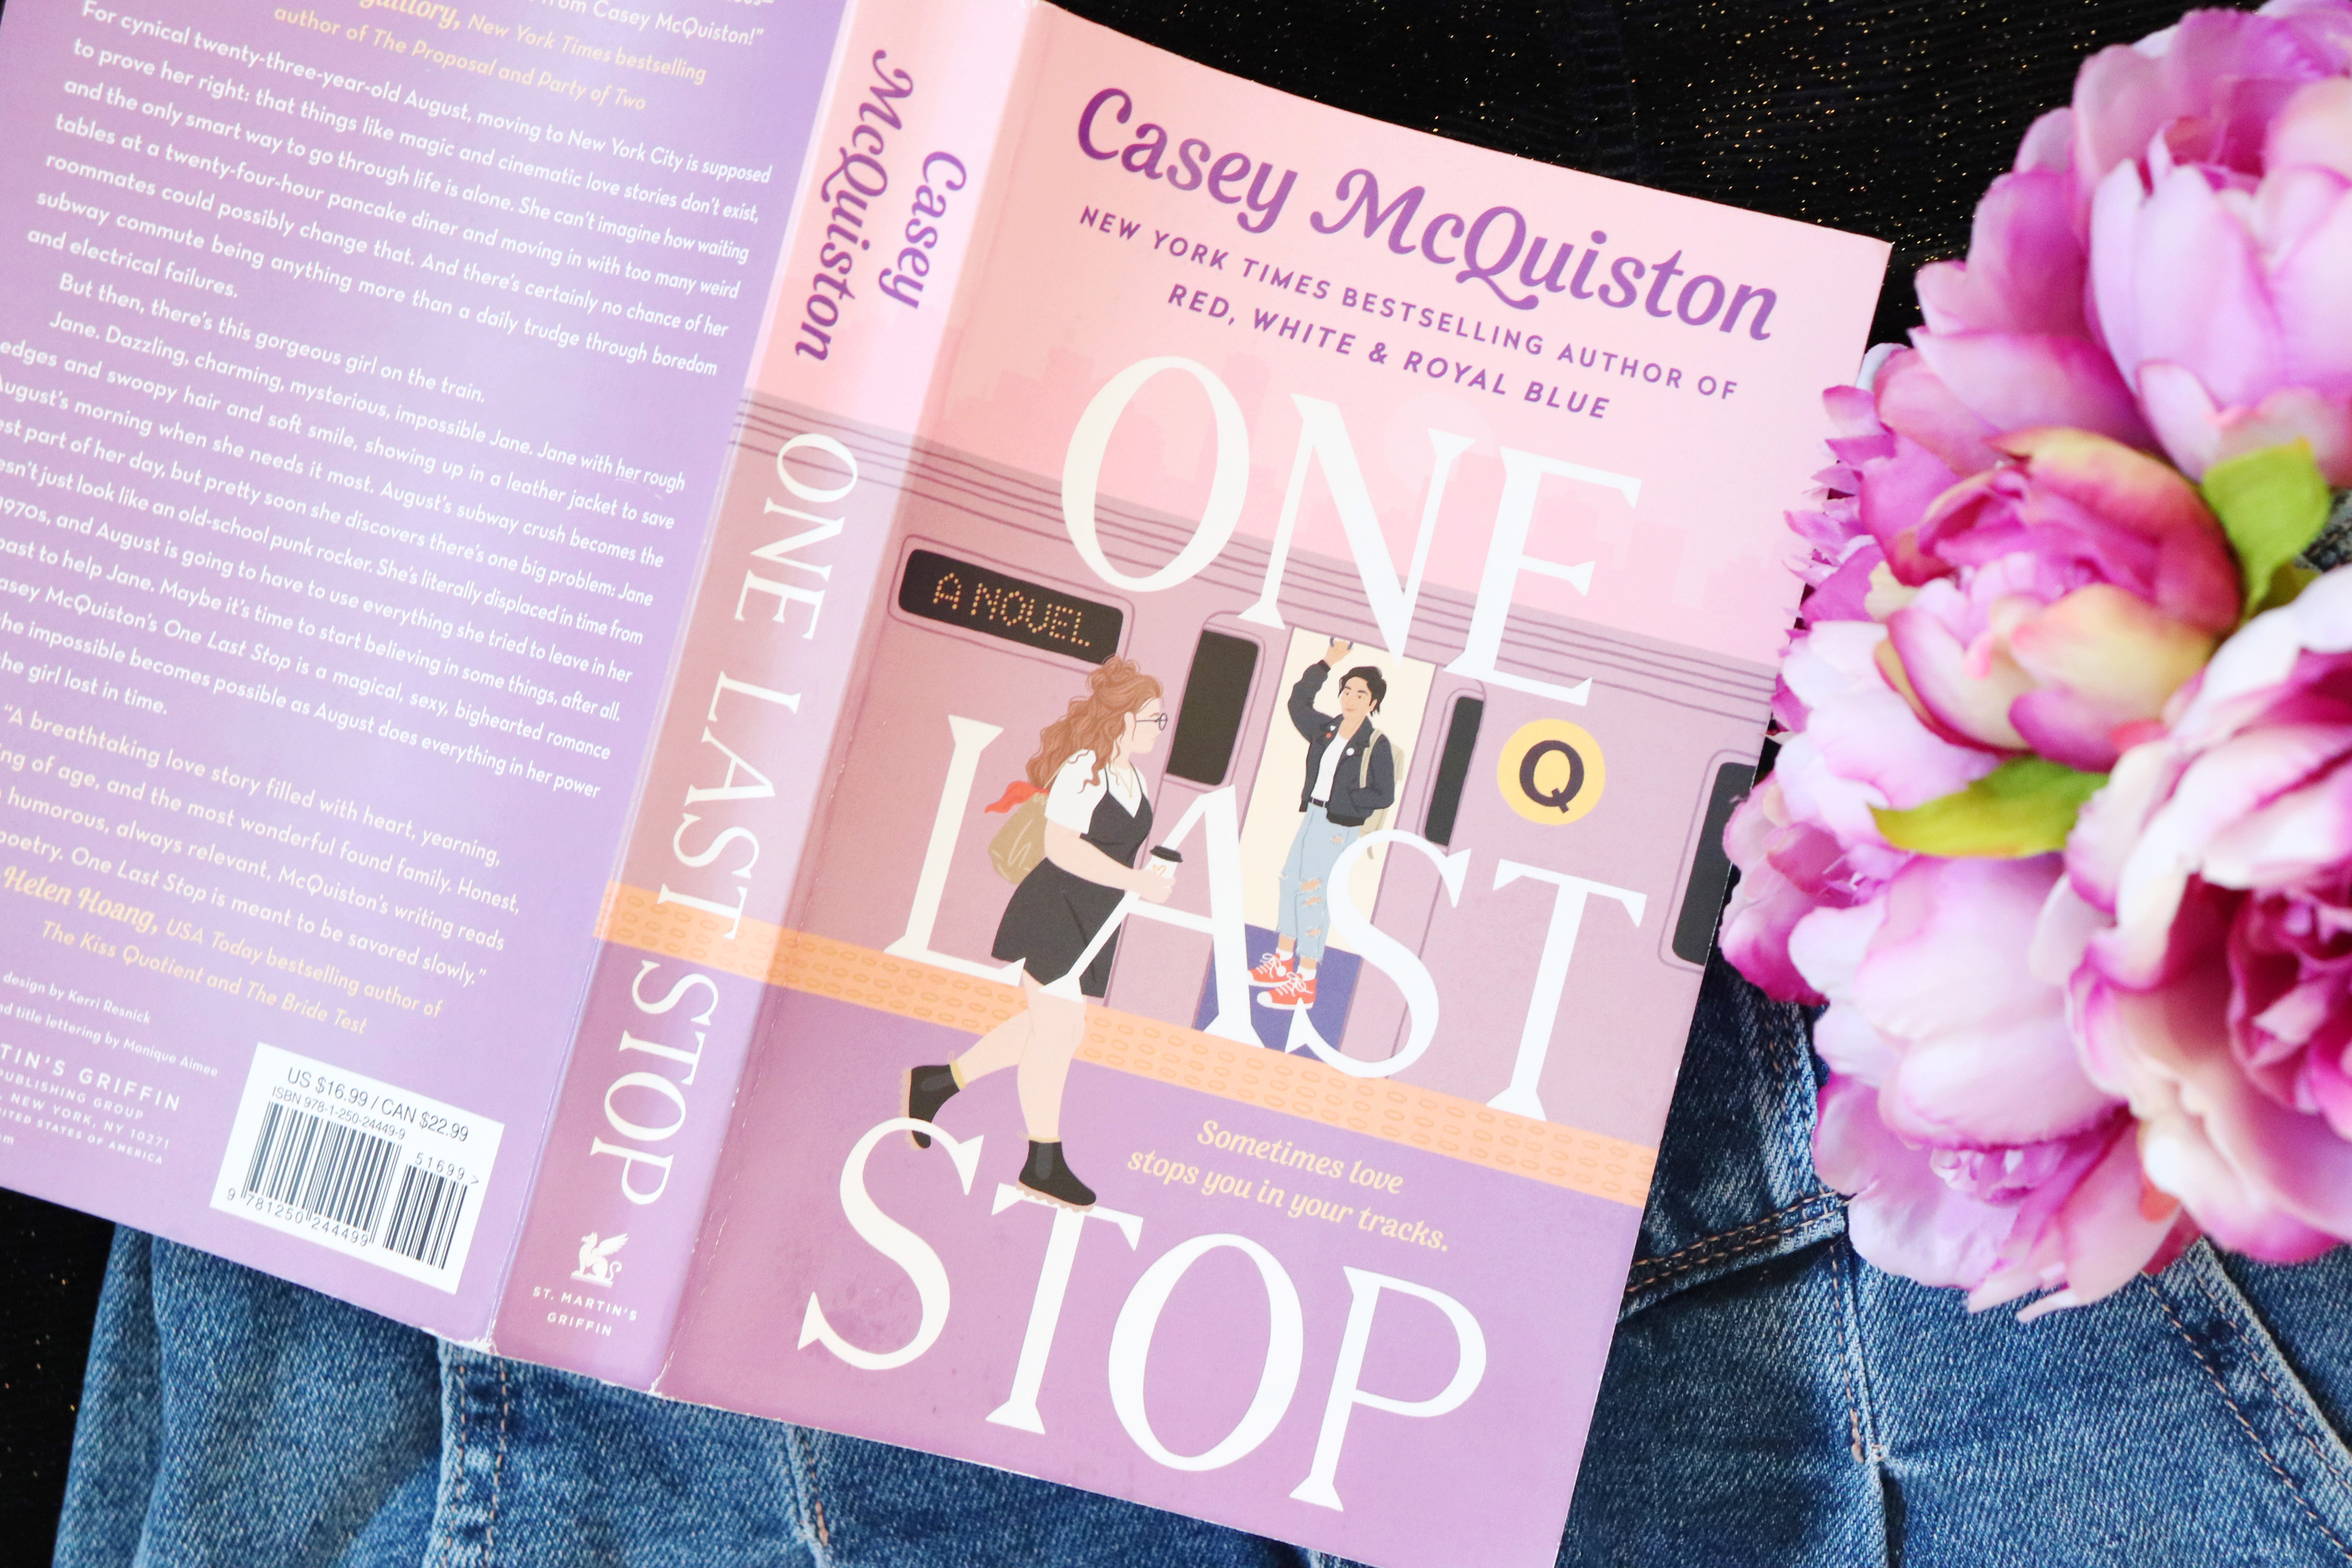 One Last Stop: Casey McQuiston